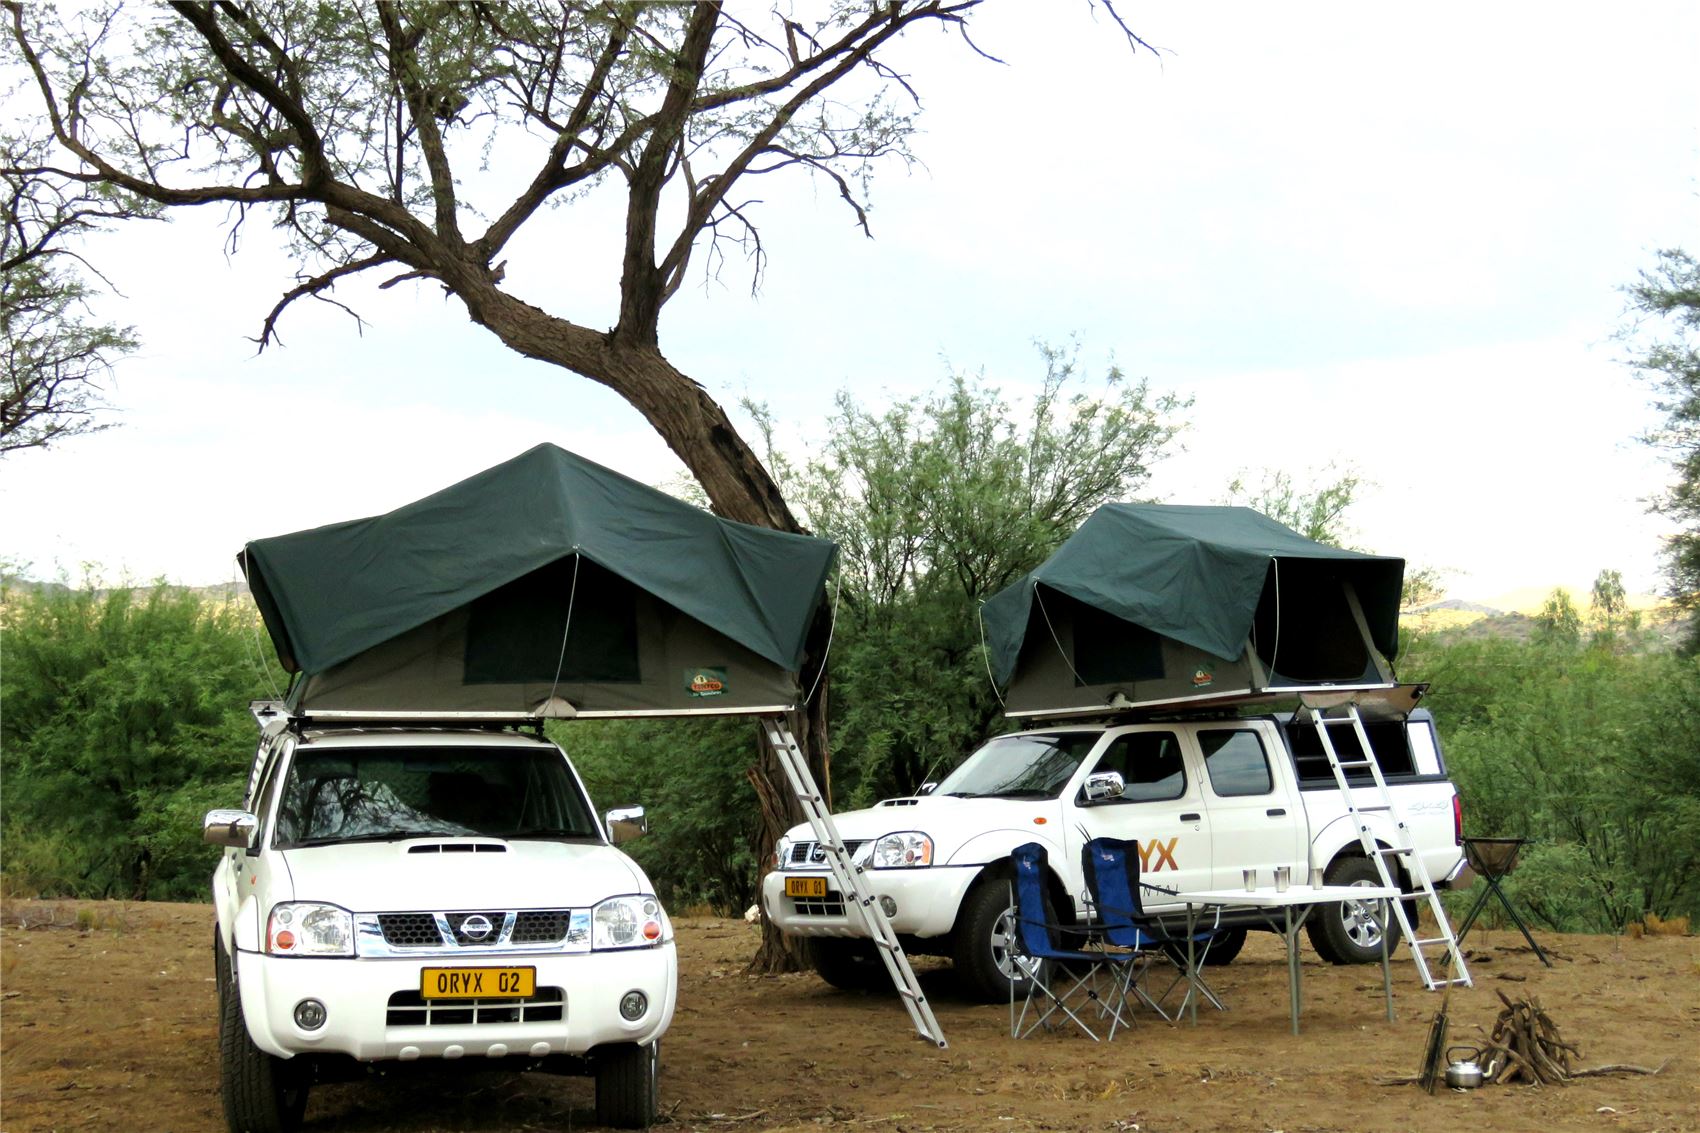 Camp setup with vehicles